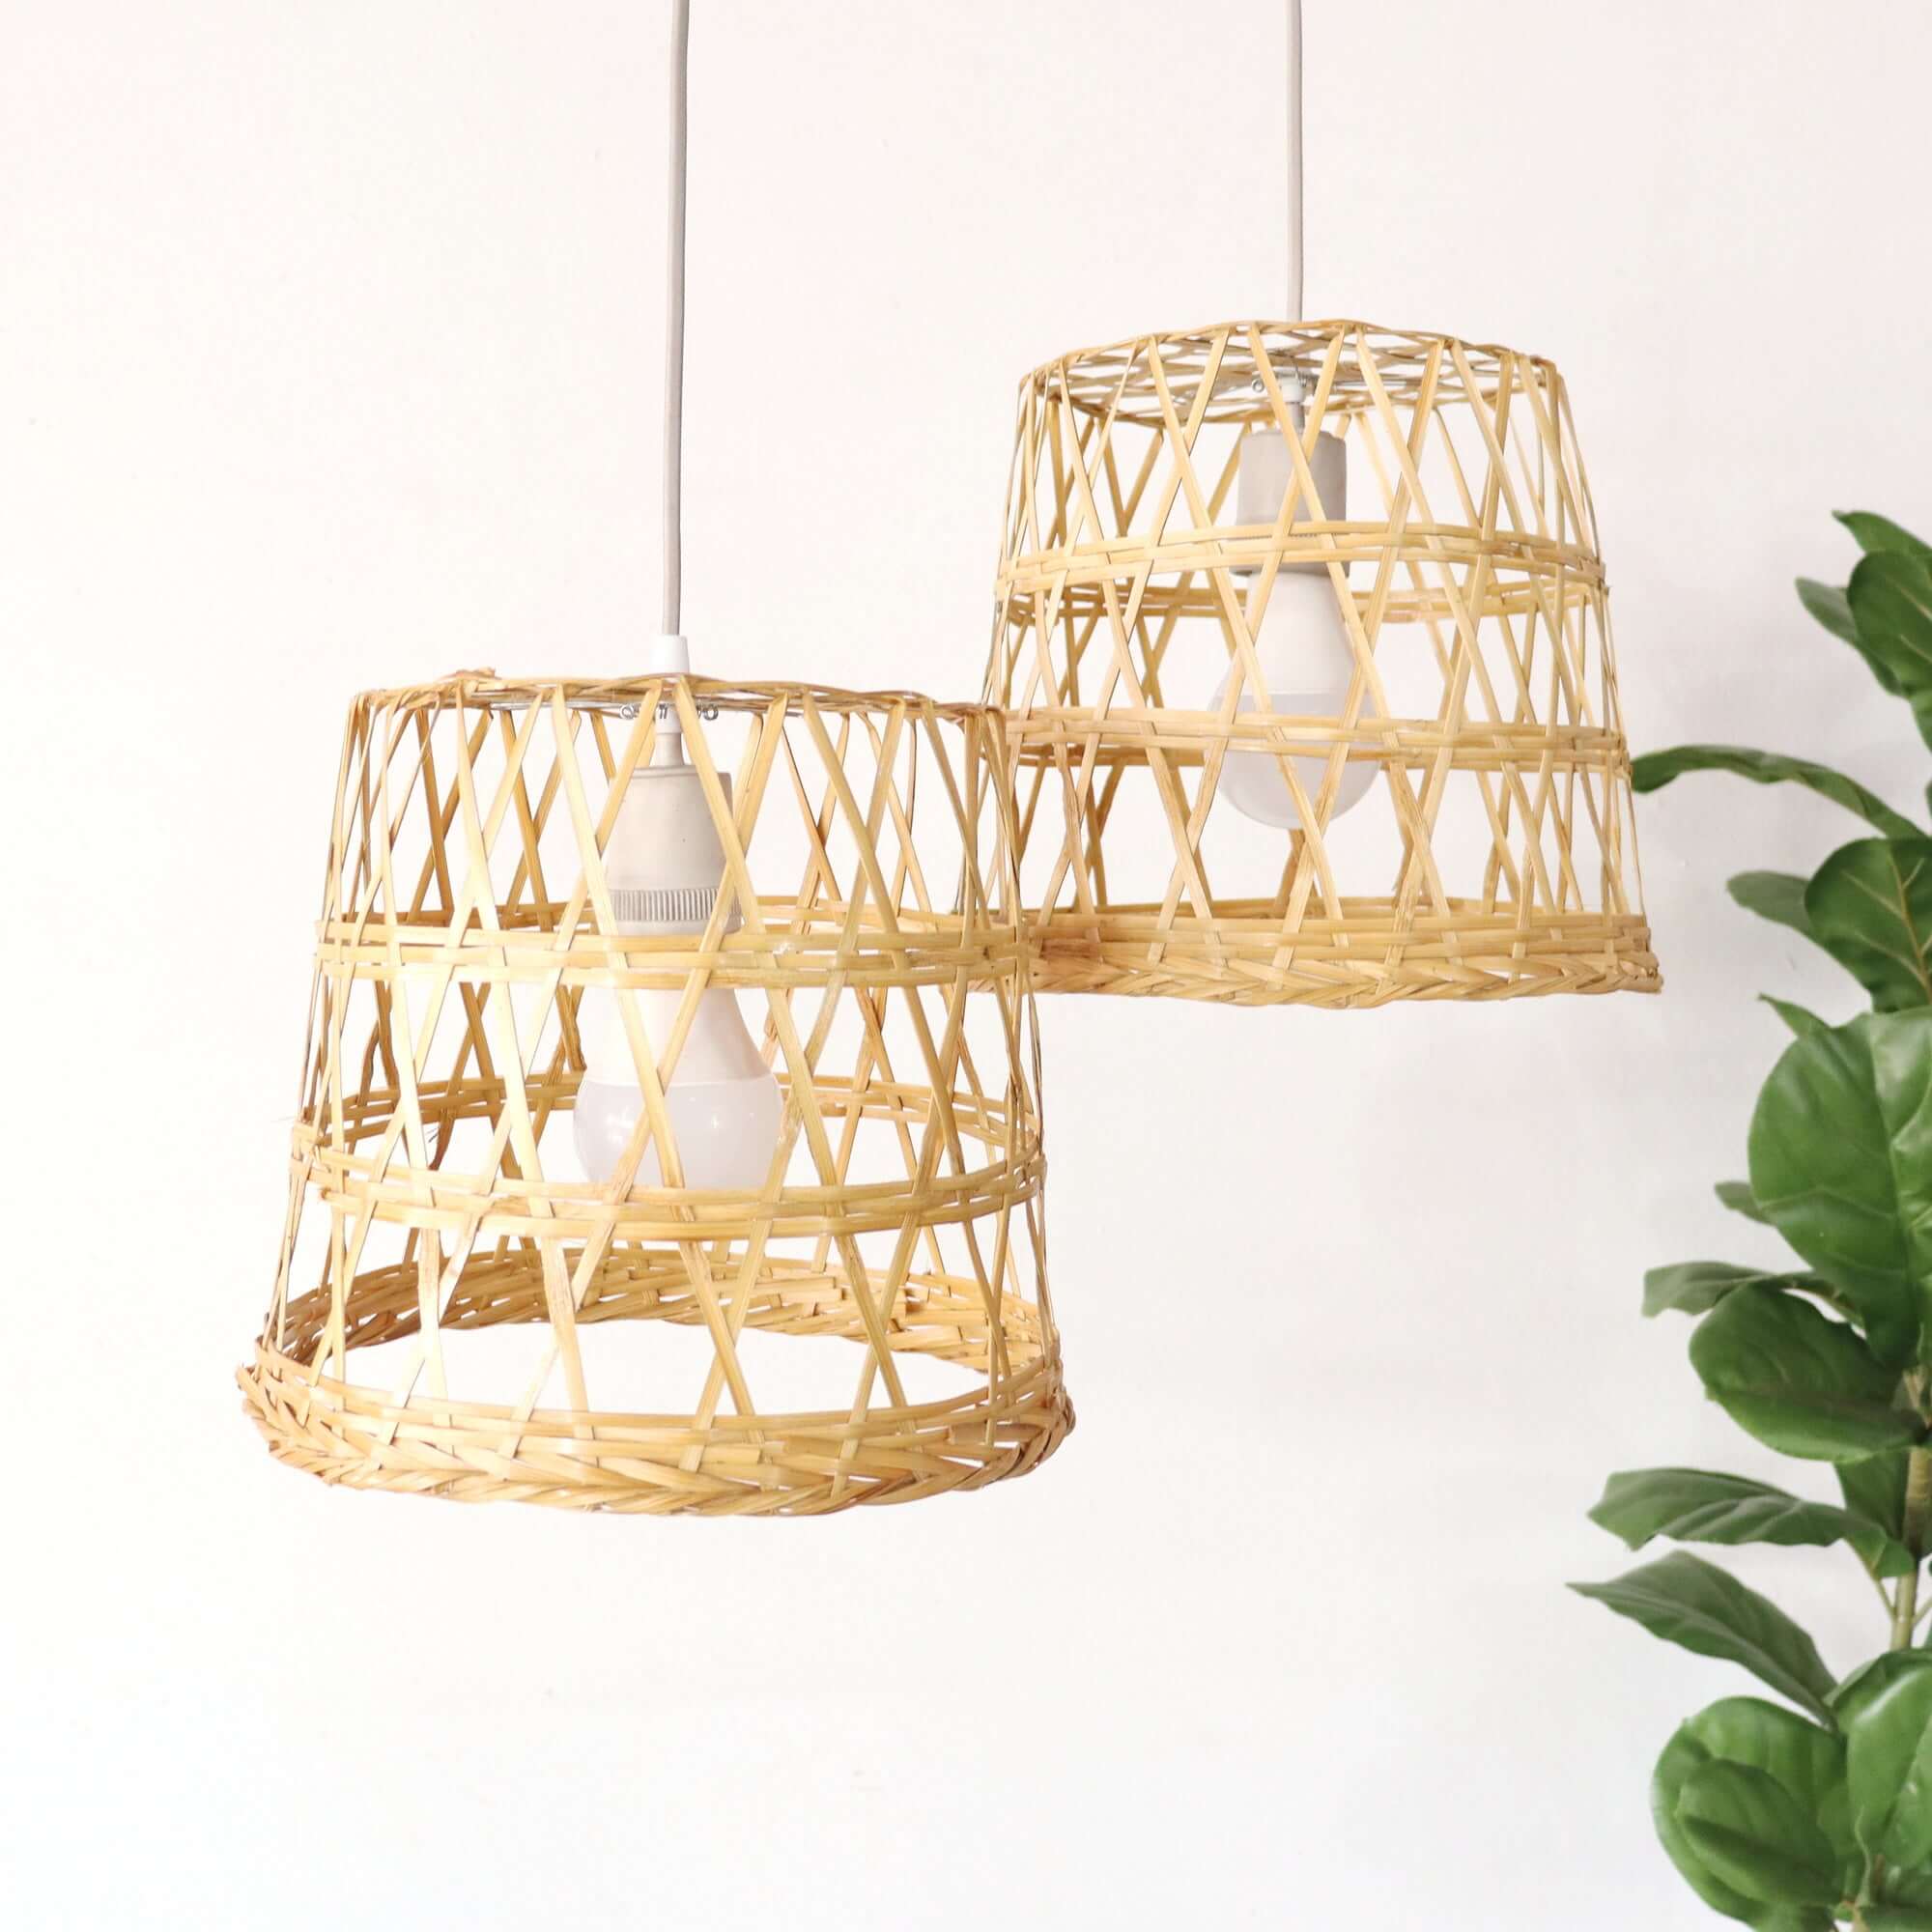 PITCHAYA - Bamboo Pendant Light Shade